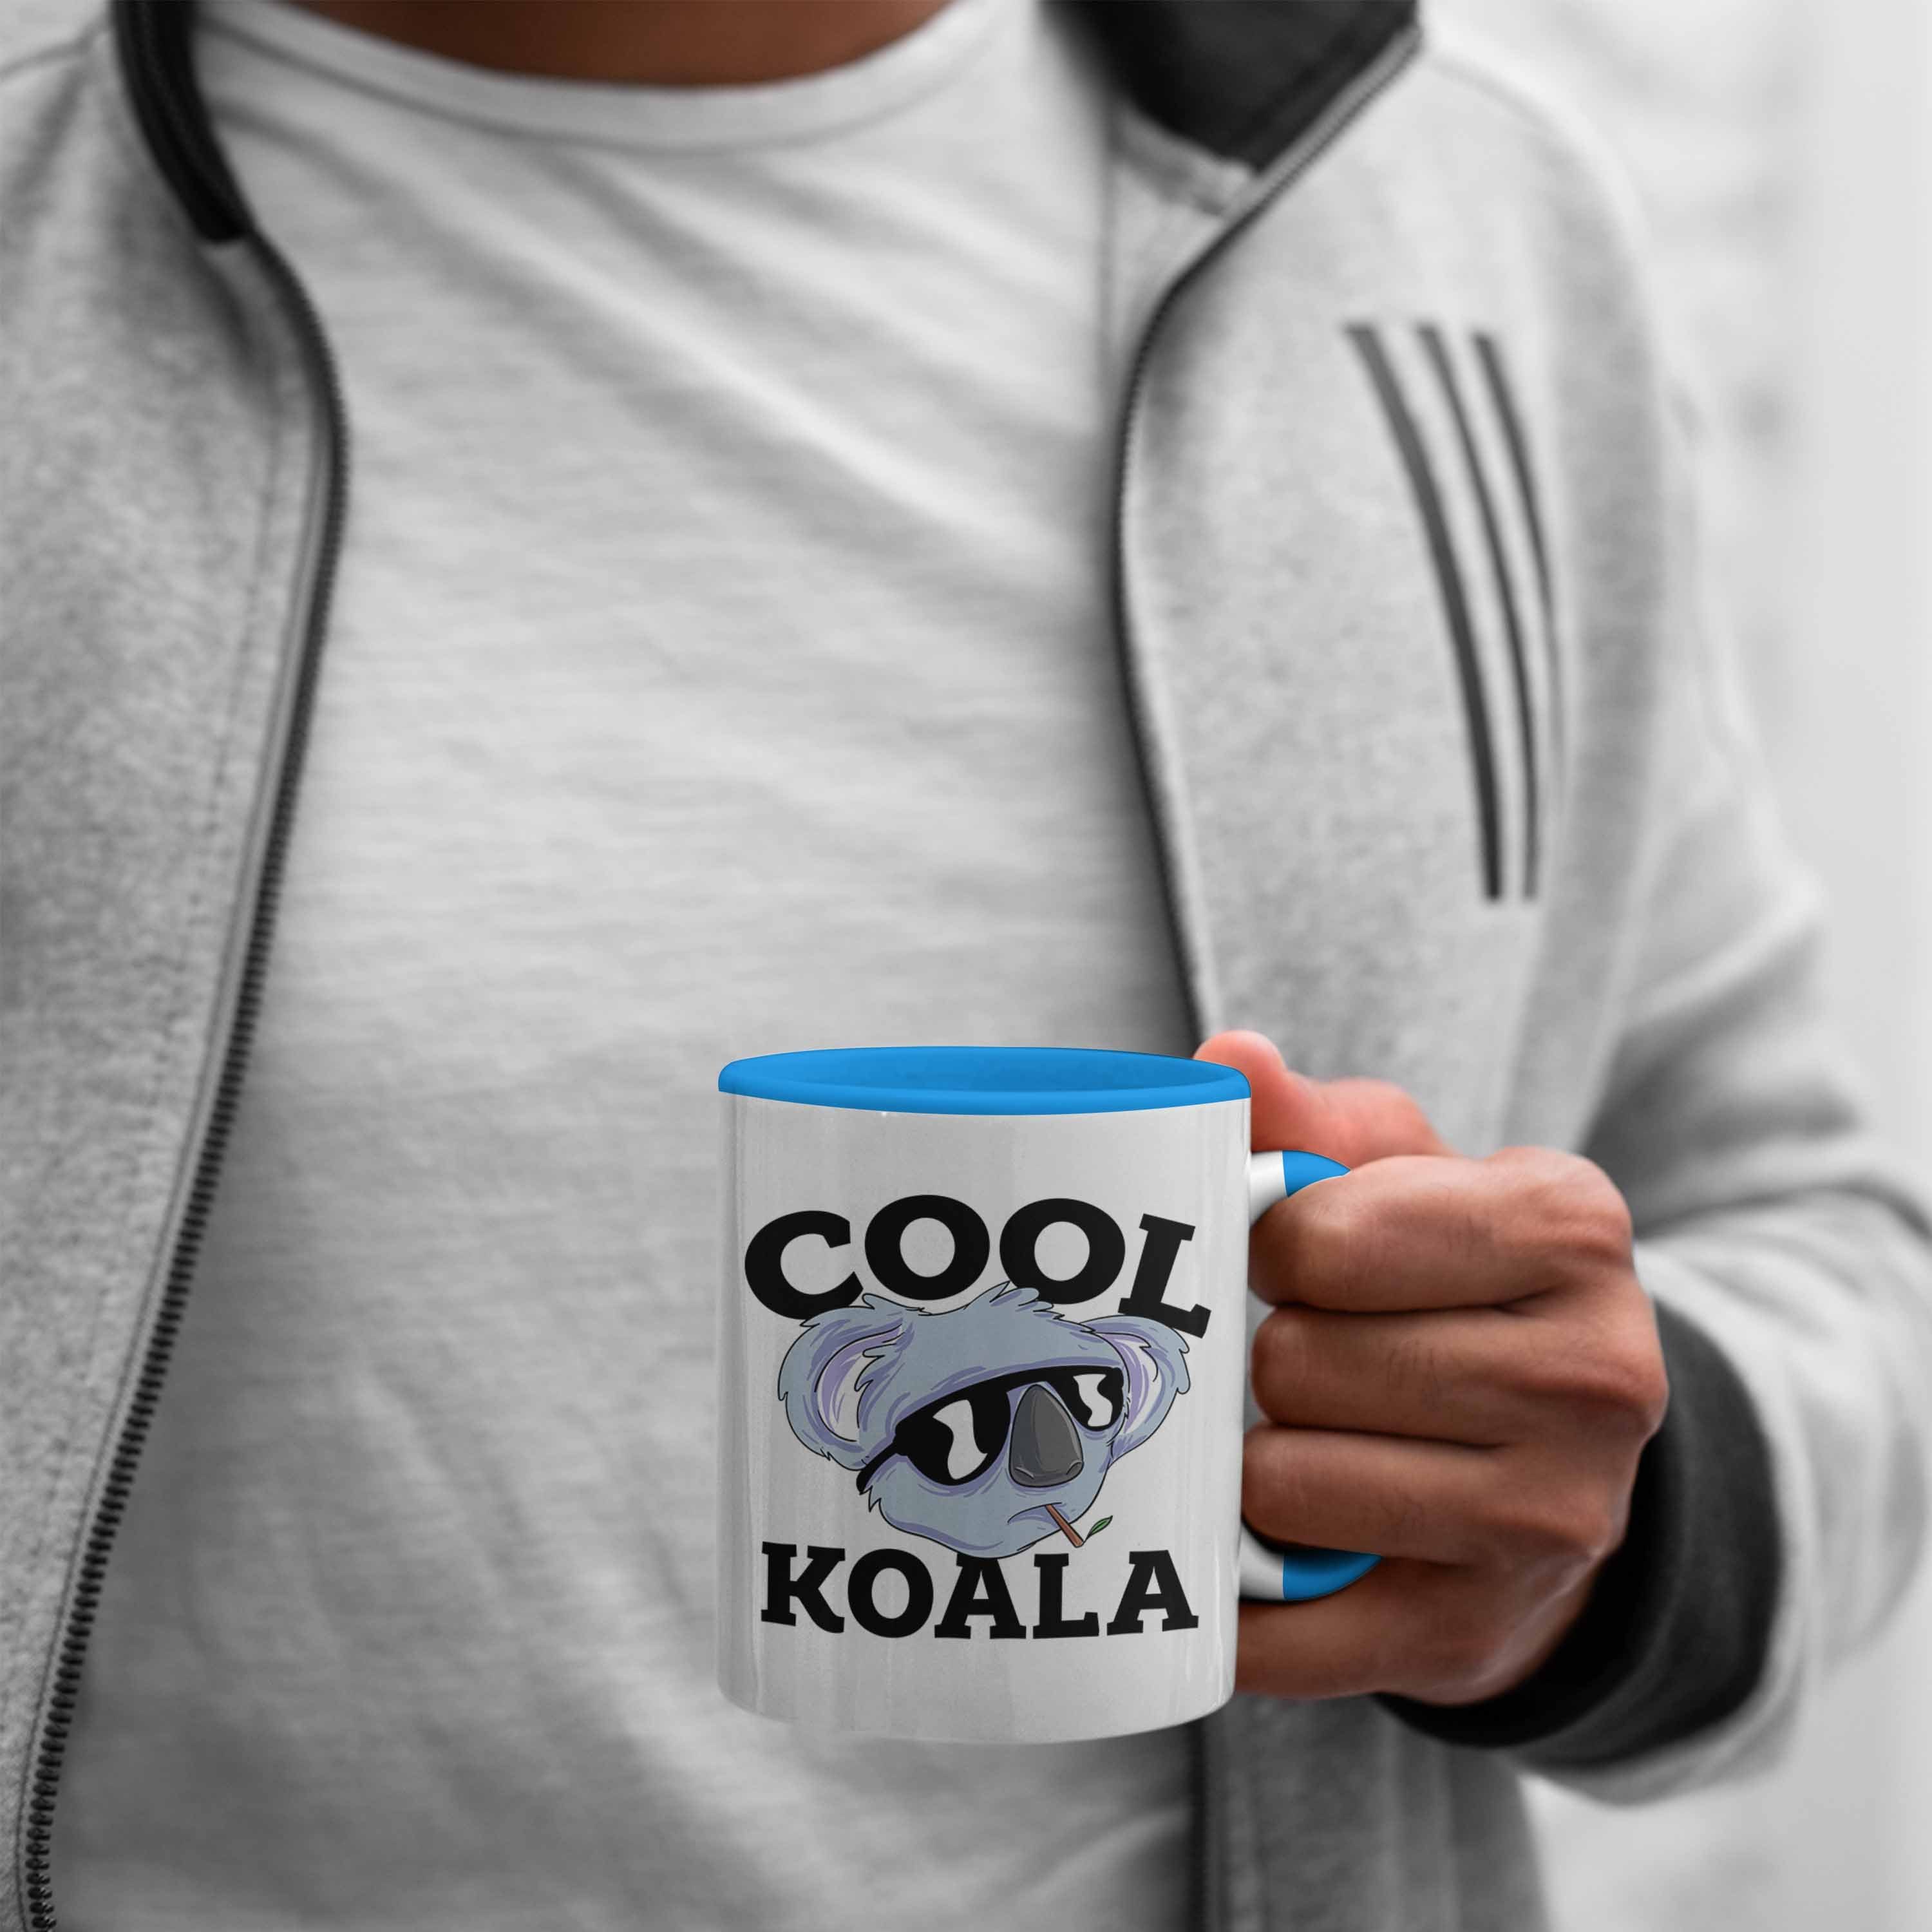 Koala Koala-Liebhaber Tasse Geschenkidee für Tasse Blau Koala-Aufdruck Trendation Tasse